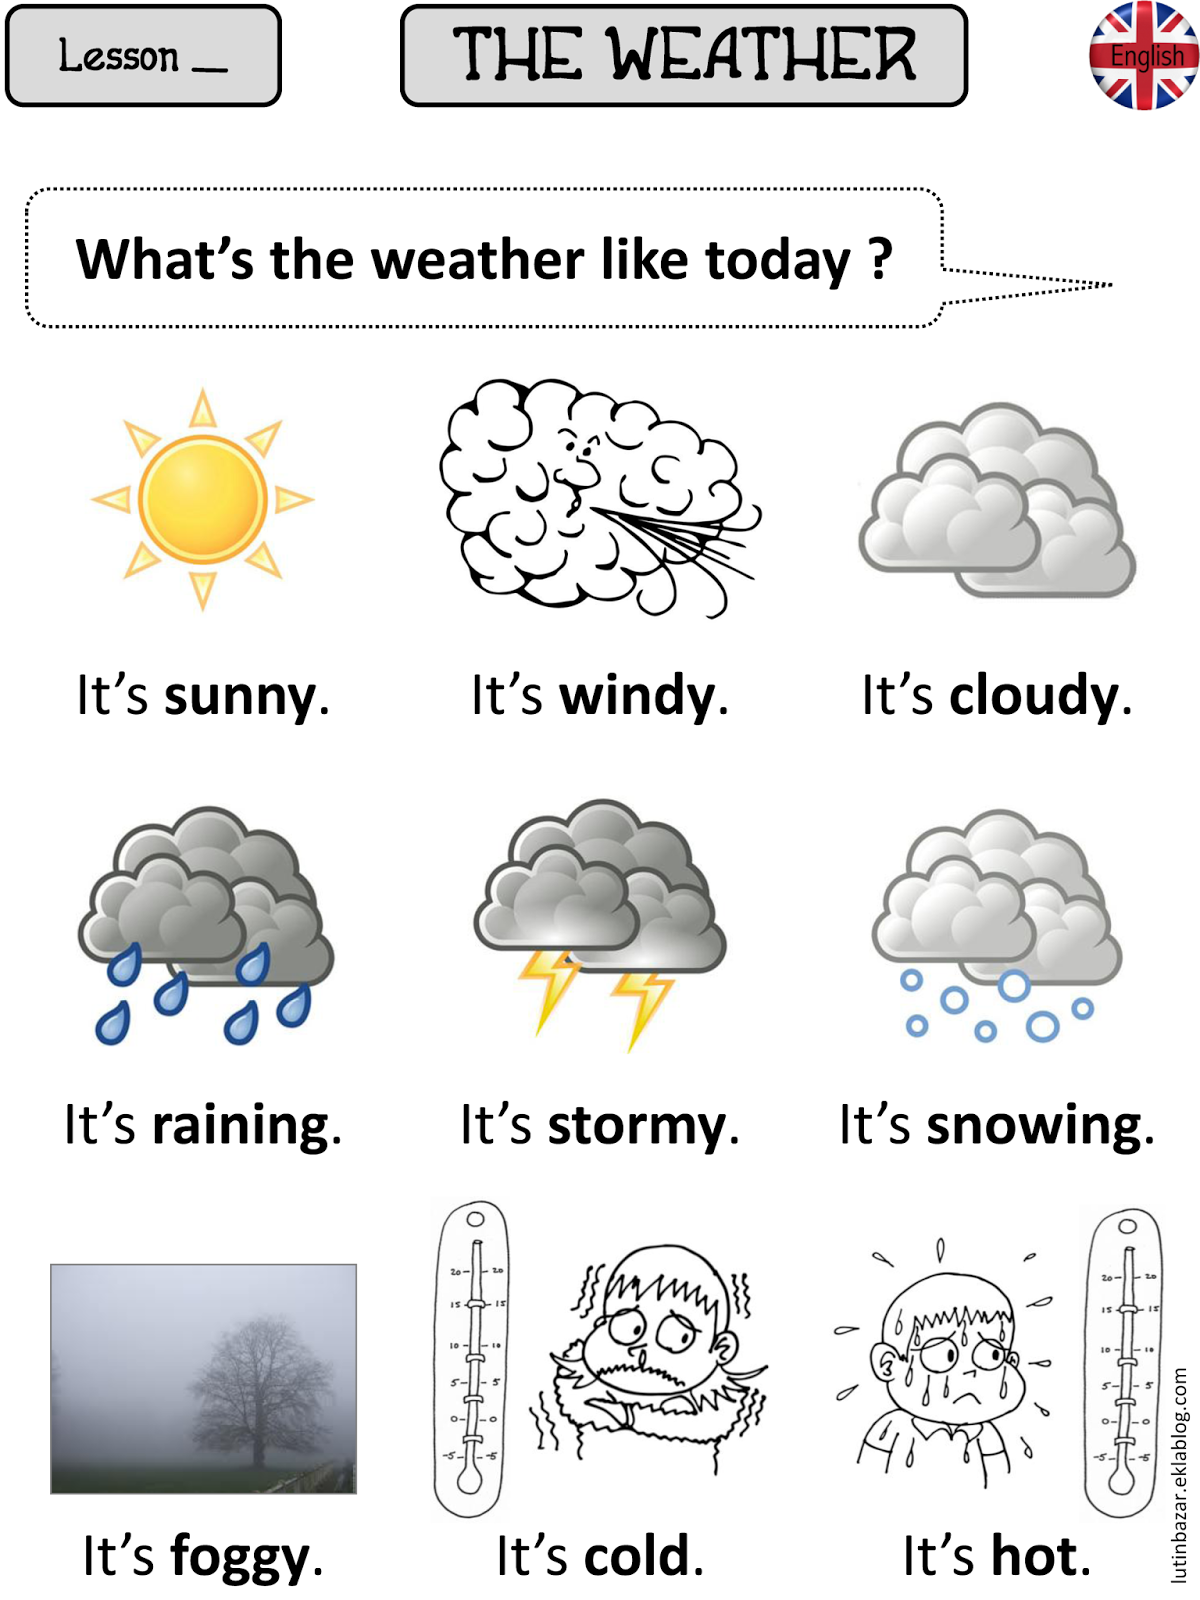 Weather direct. Weather задания. Weather для детей на английском. Погода на английском. Weather английский задания.